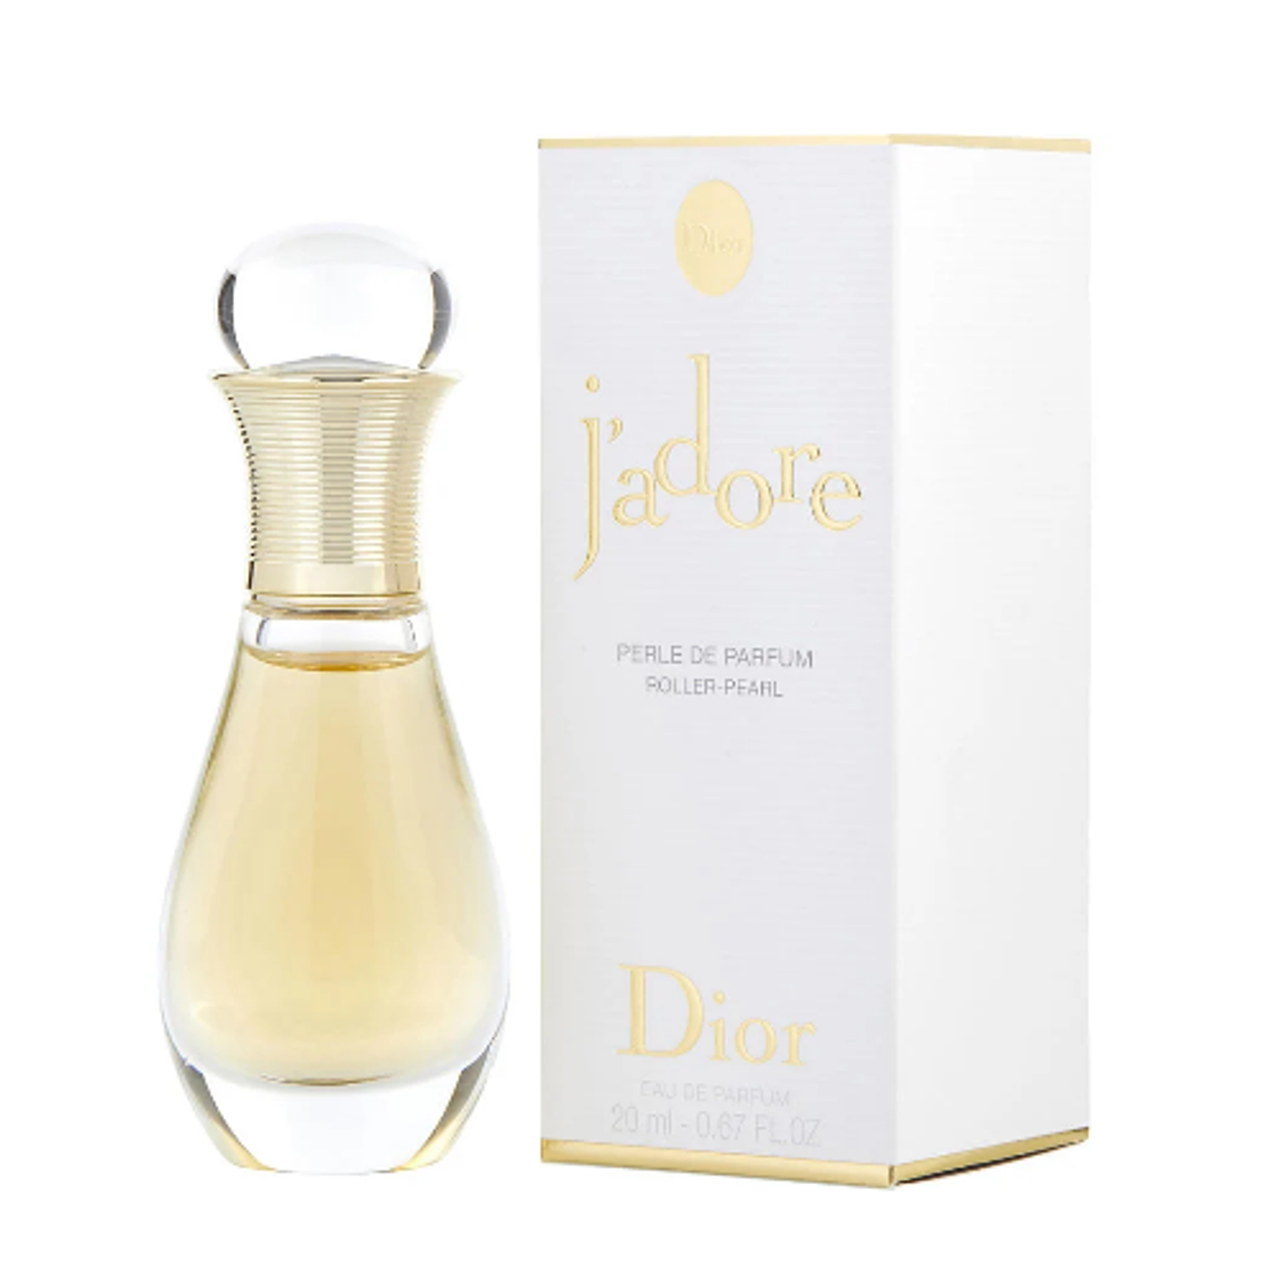 Dior J'adore Eau de Parfum Infinissime Roller Pearl